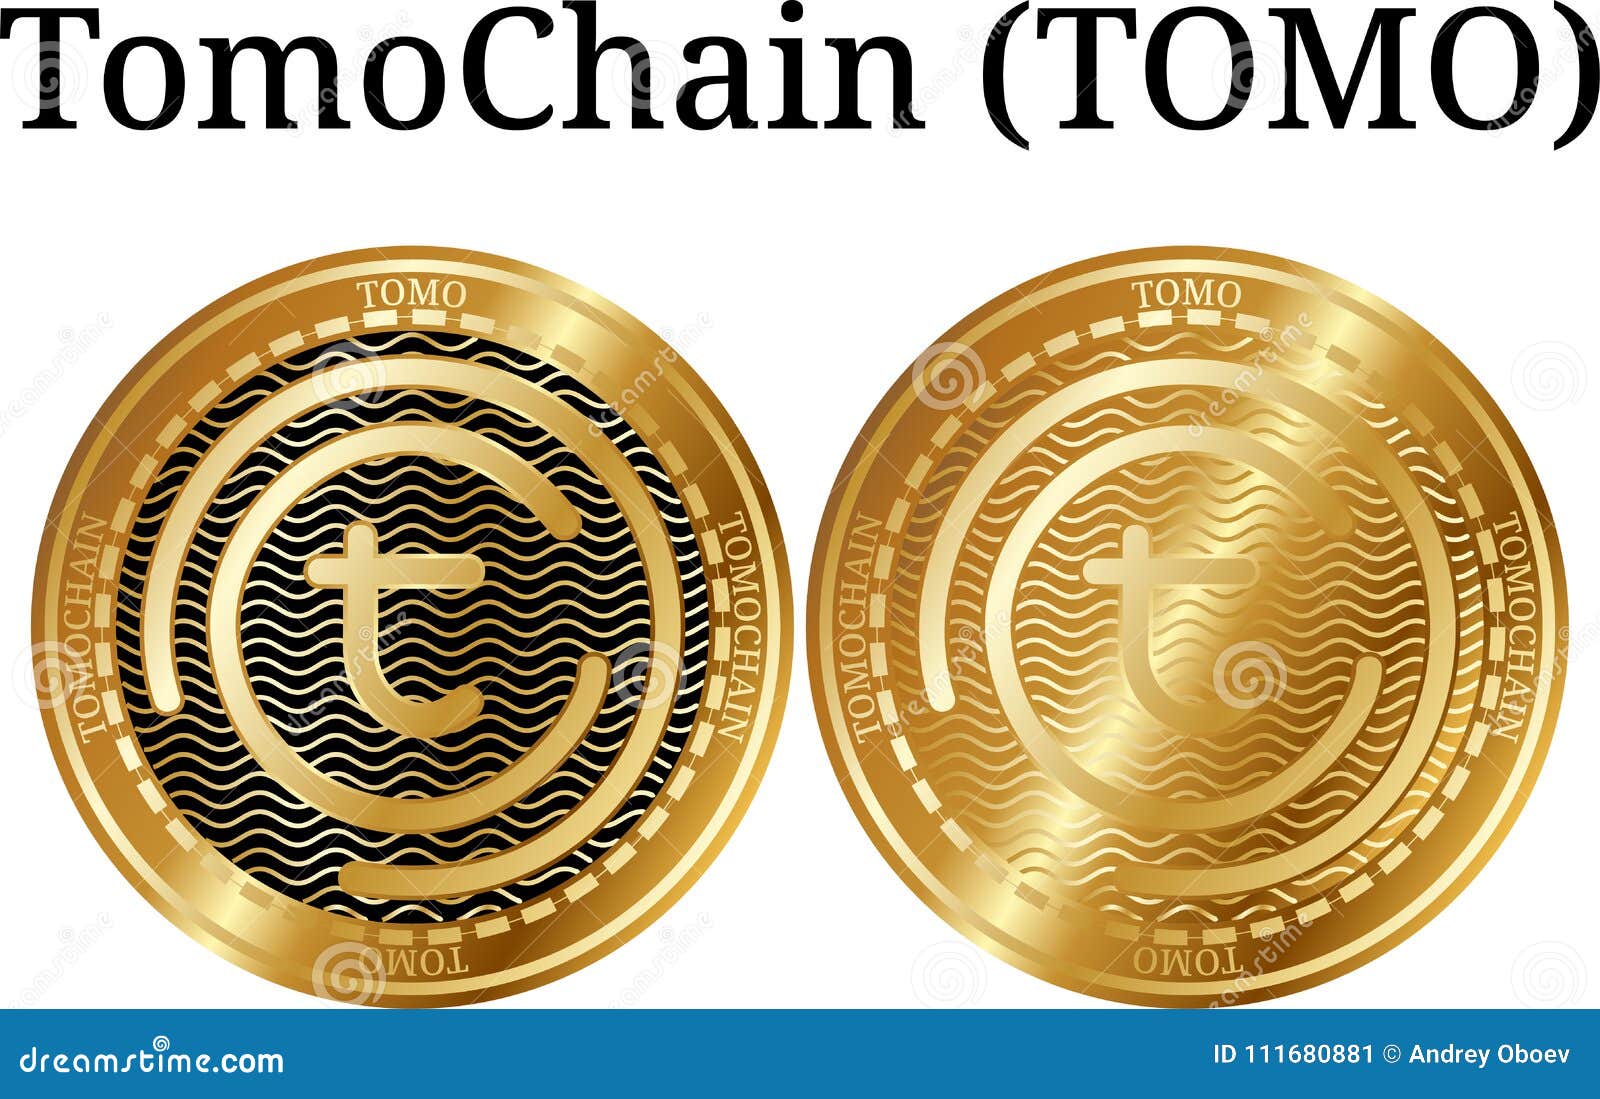 set of physical golden coin tomochain tomo